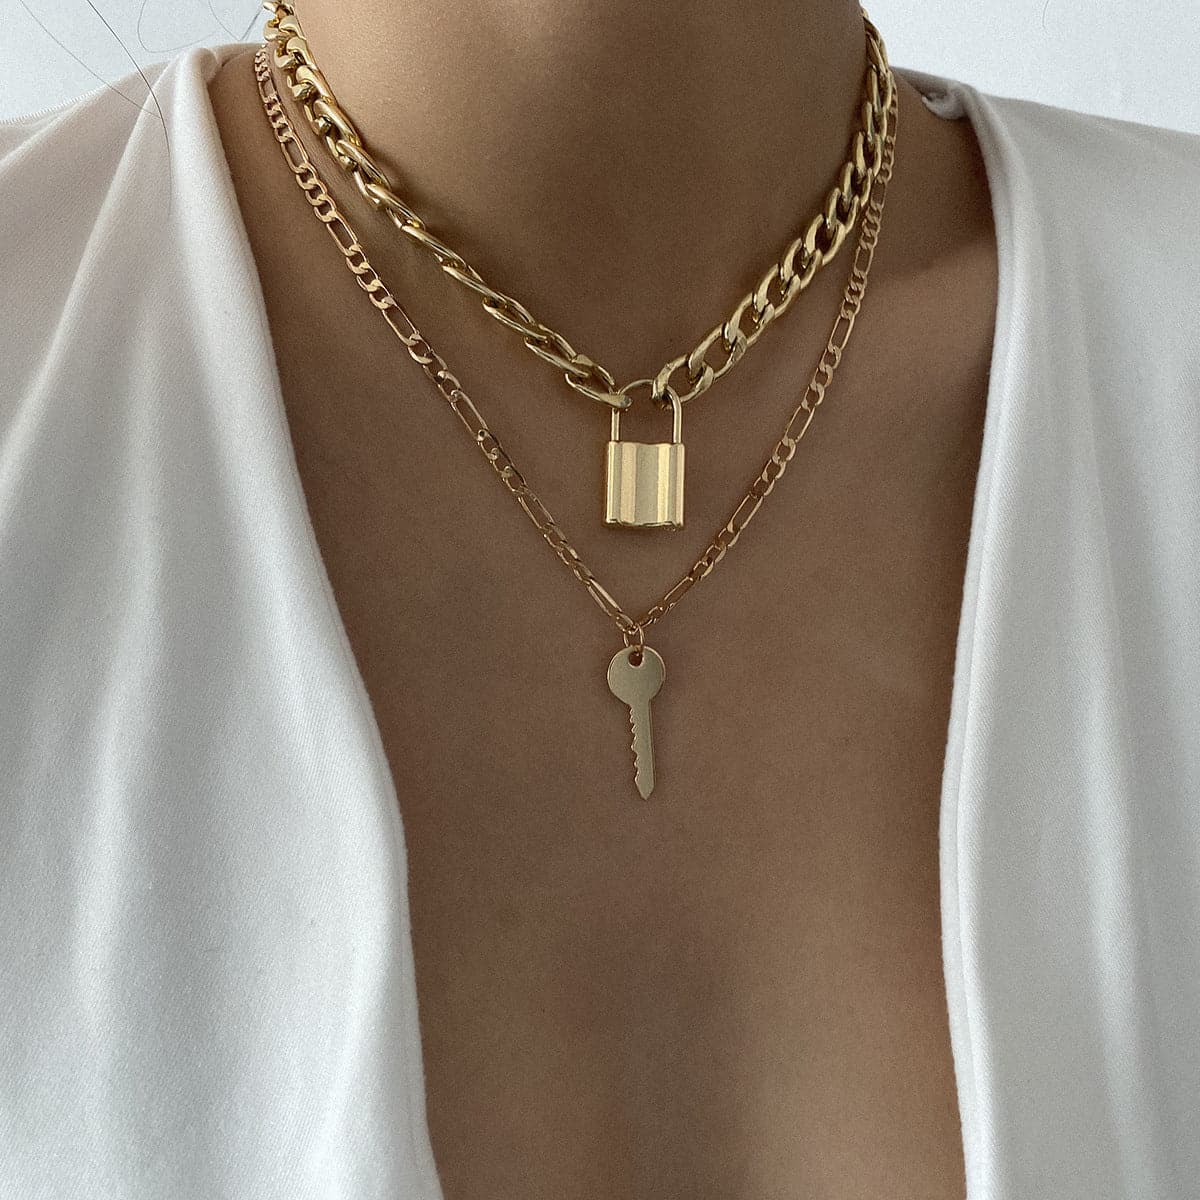 18K Gold-Plated Lock & Key Pendant Necklace Set